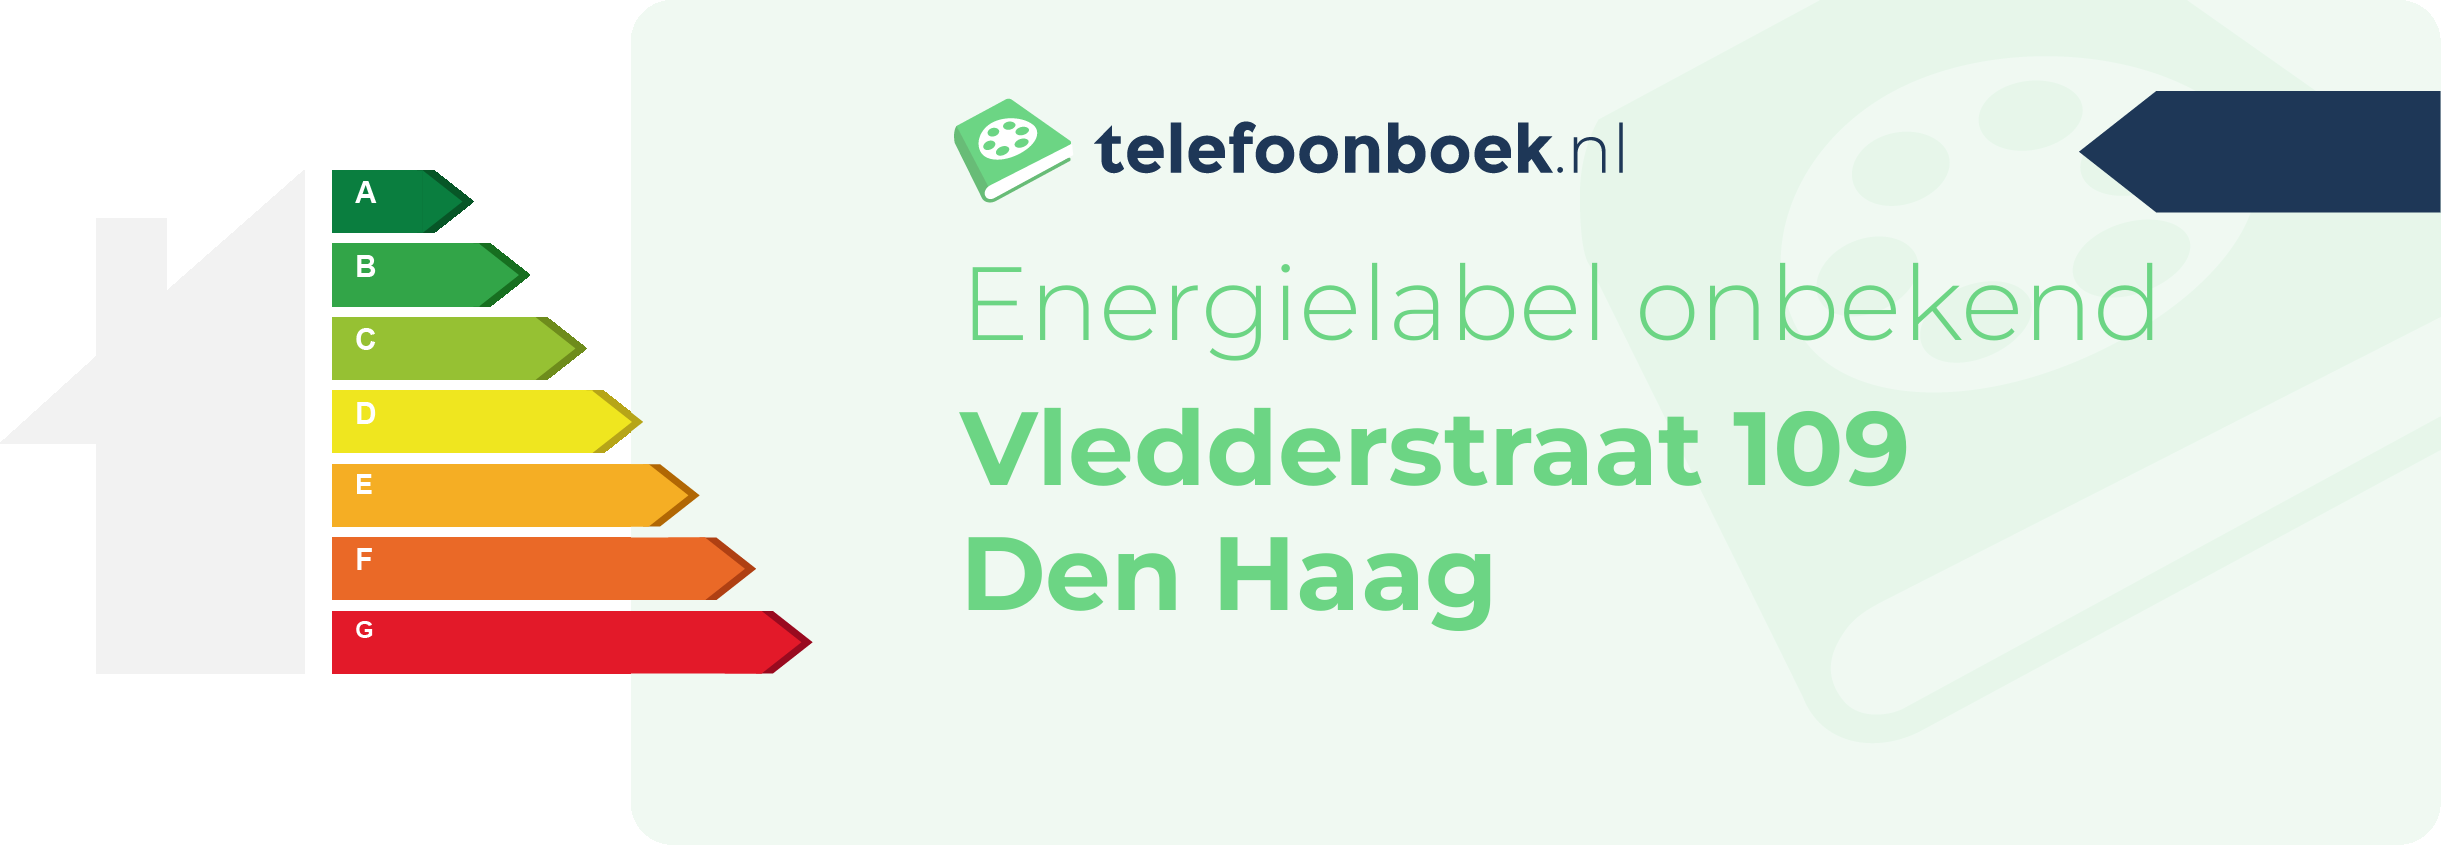 Energielabel Vledderstraat 109 Den Haag